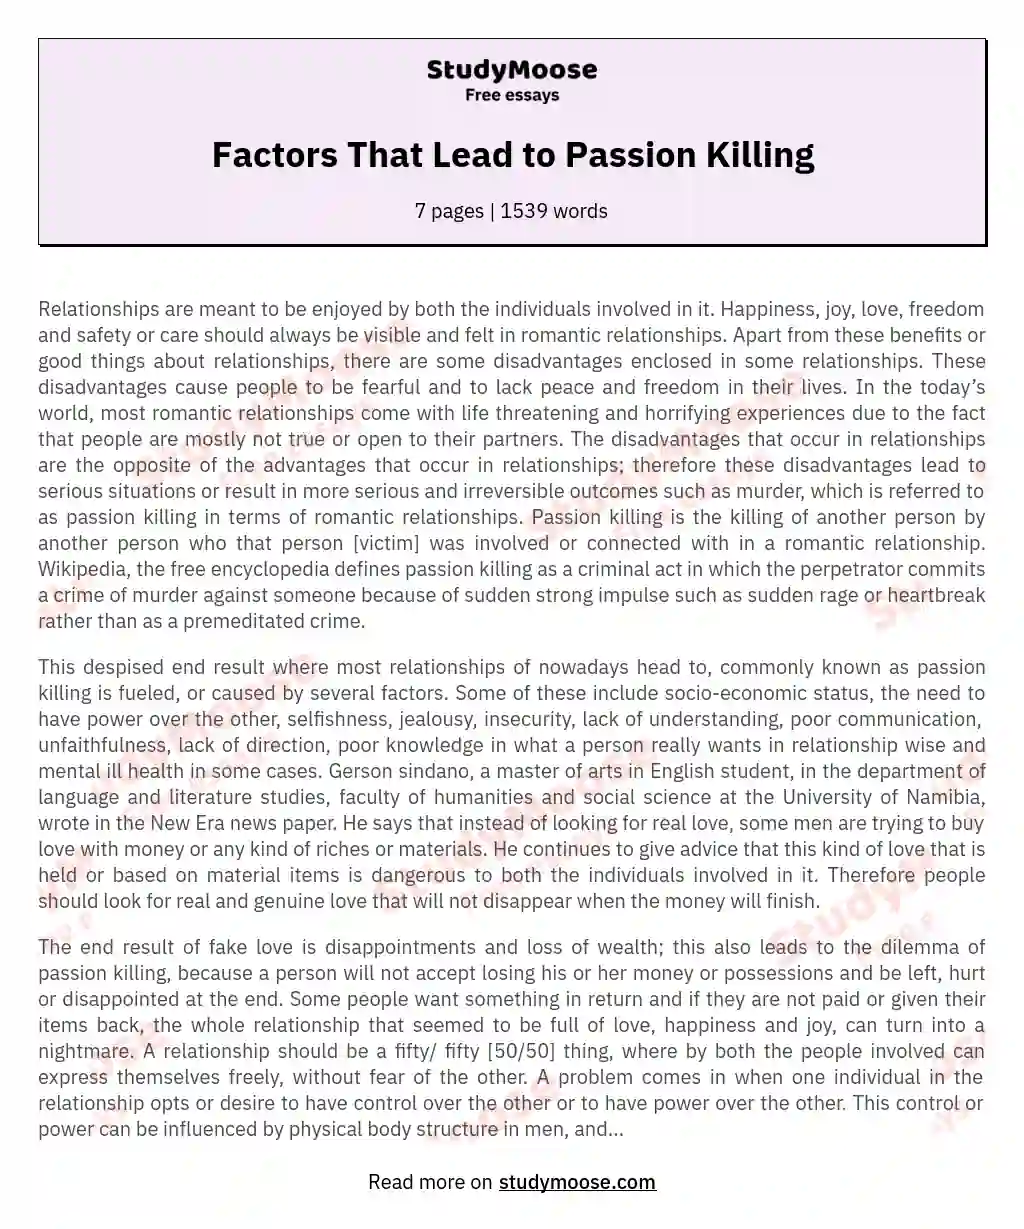 Factors That Lead to Passion Killing essay